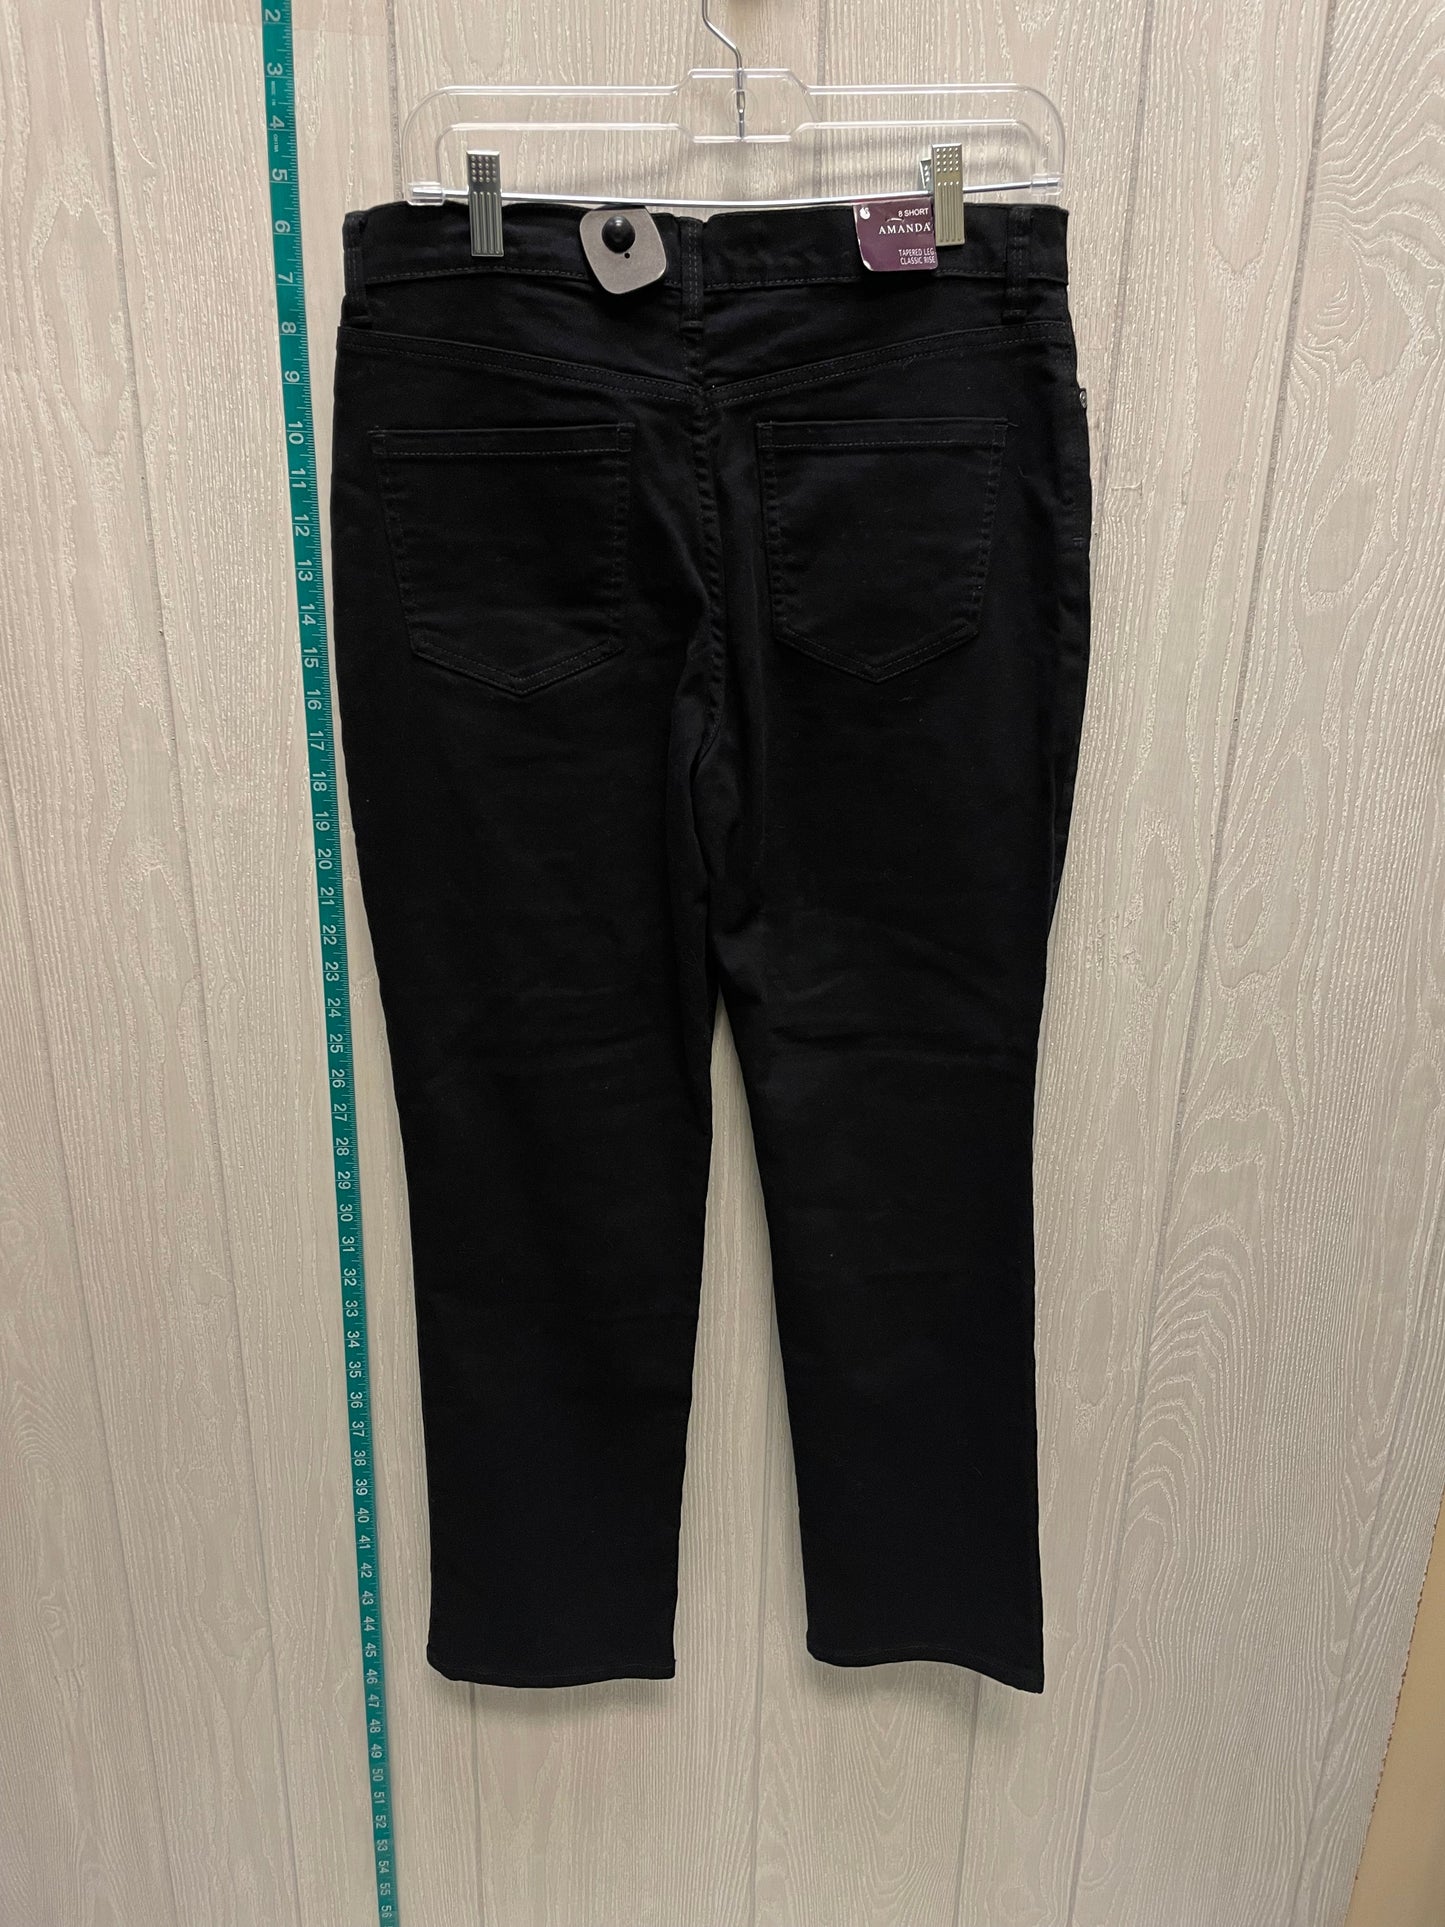 Black Denim Jeans Straight Gloria Vanderbilt, Size 8